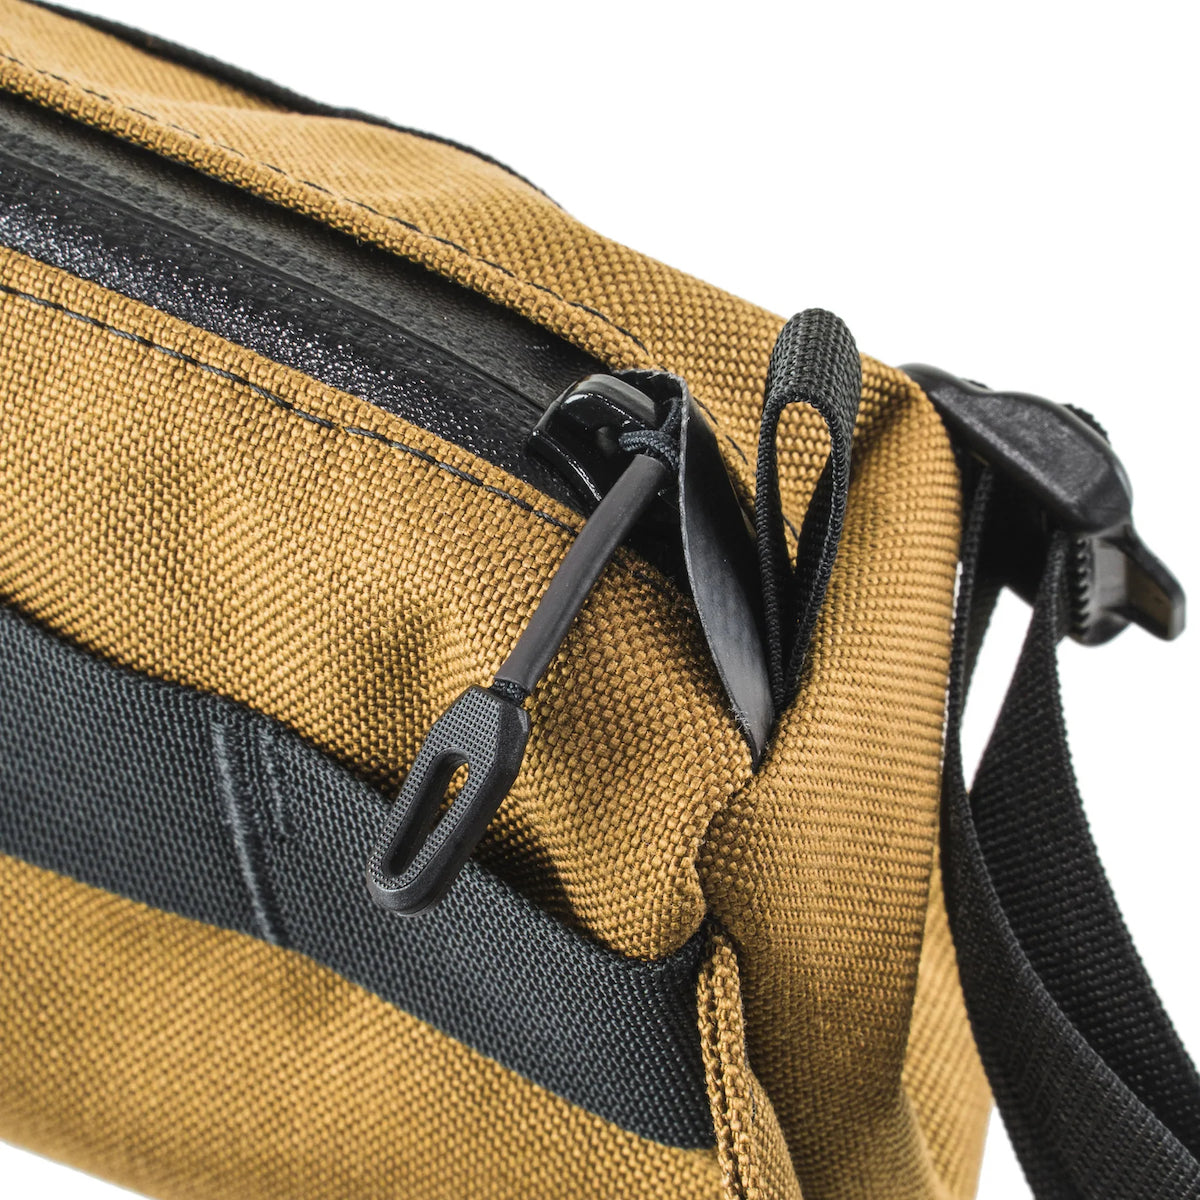 Carhartt Sling Bag Review